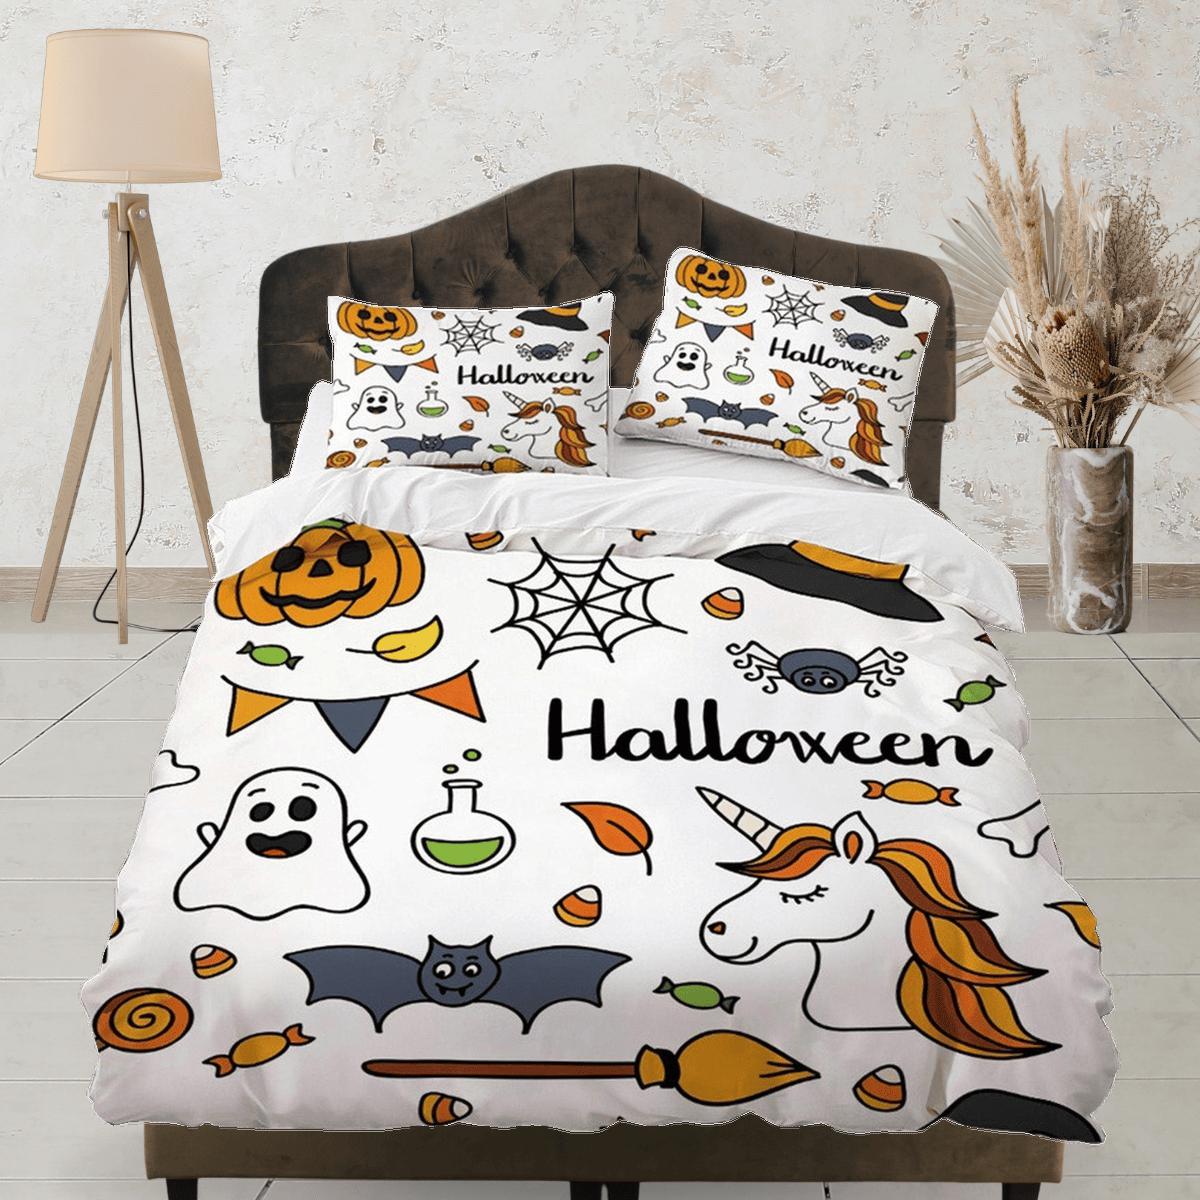 daintyduvet Ghost halloween unicorn pumpkin bedding & pillowcase, duvet cover set dorm bedding, halloween decor, nursery toddler bedding, halloween gift